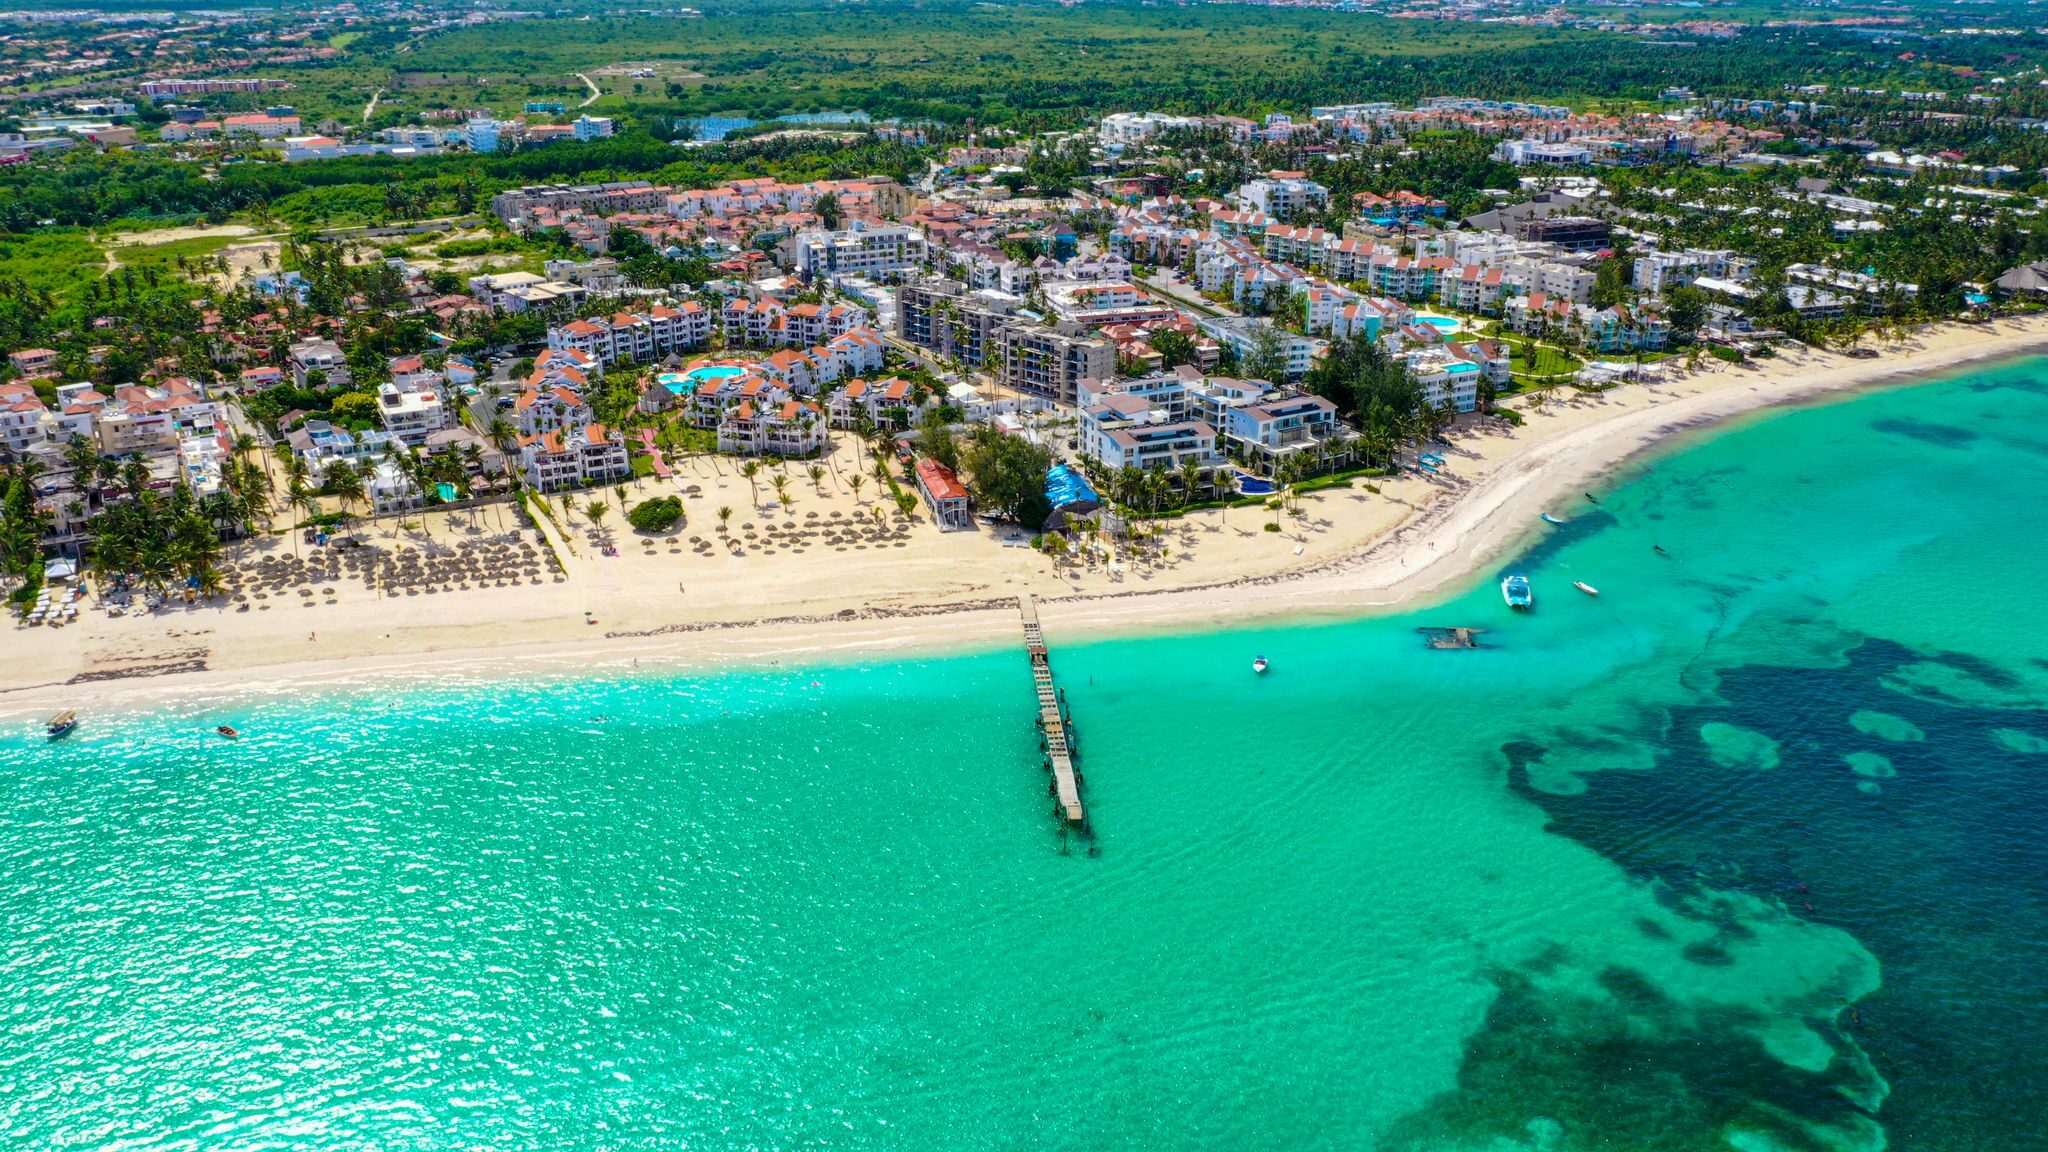 Desarrollo inmobiliario en ascenso – Bávaro / Punta Cana